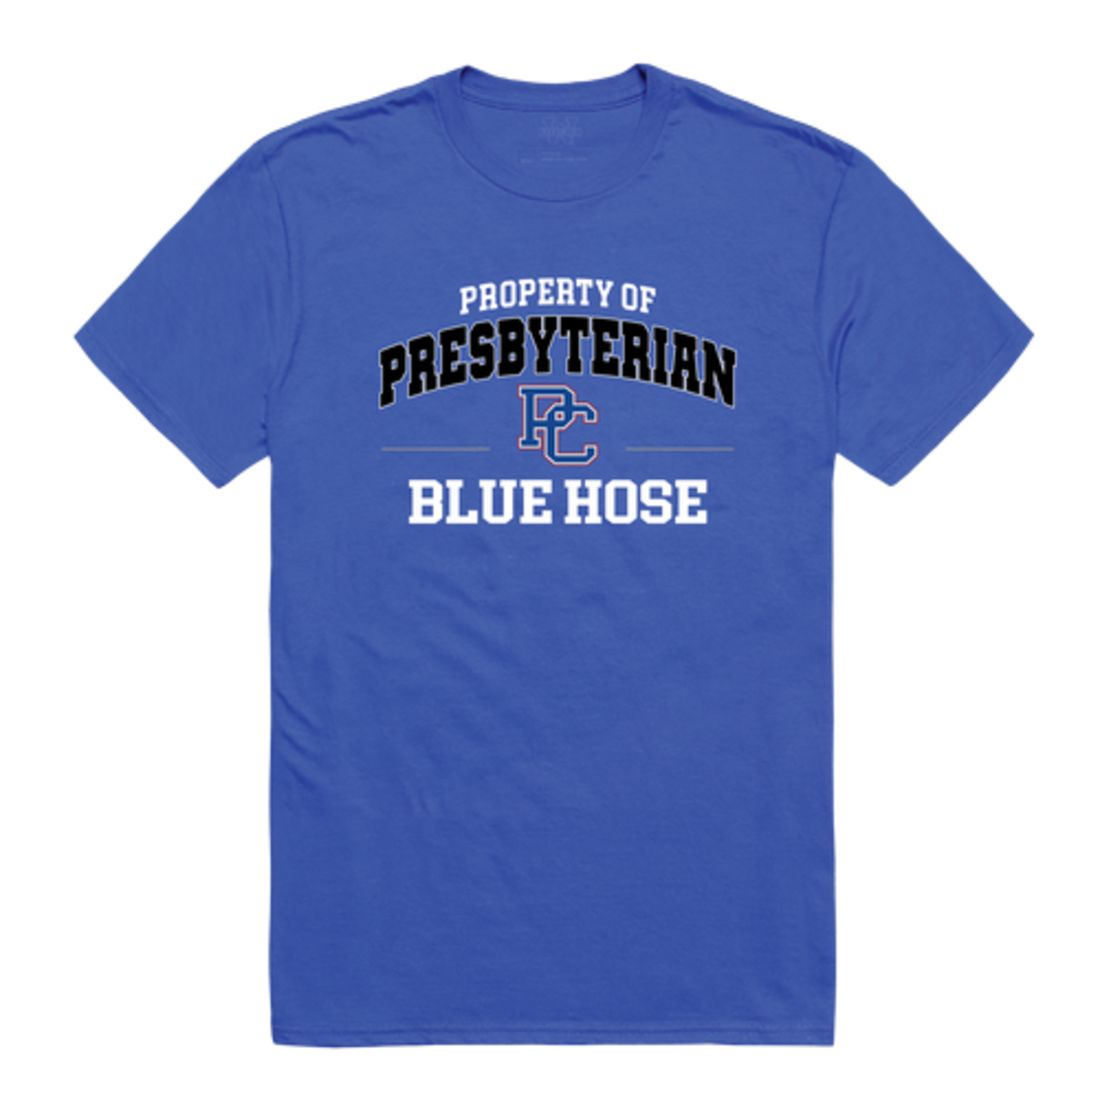 Presbyterian College Blue Hose Property T-Shirt Tee